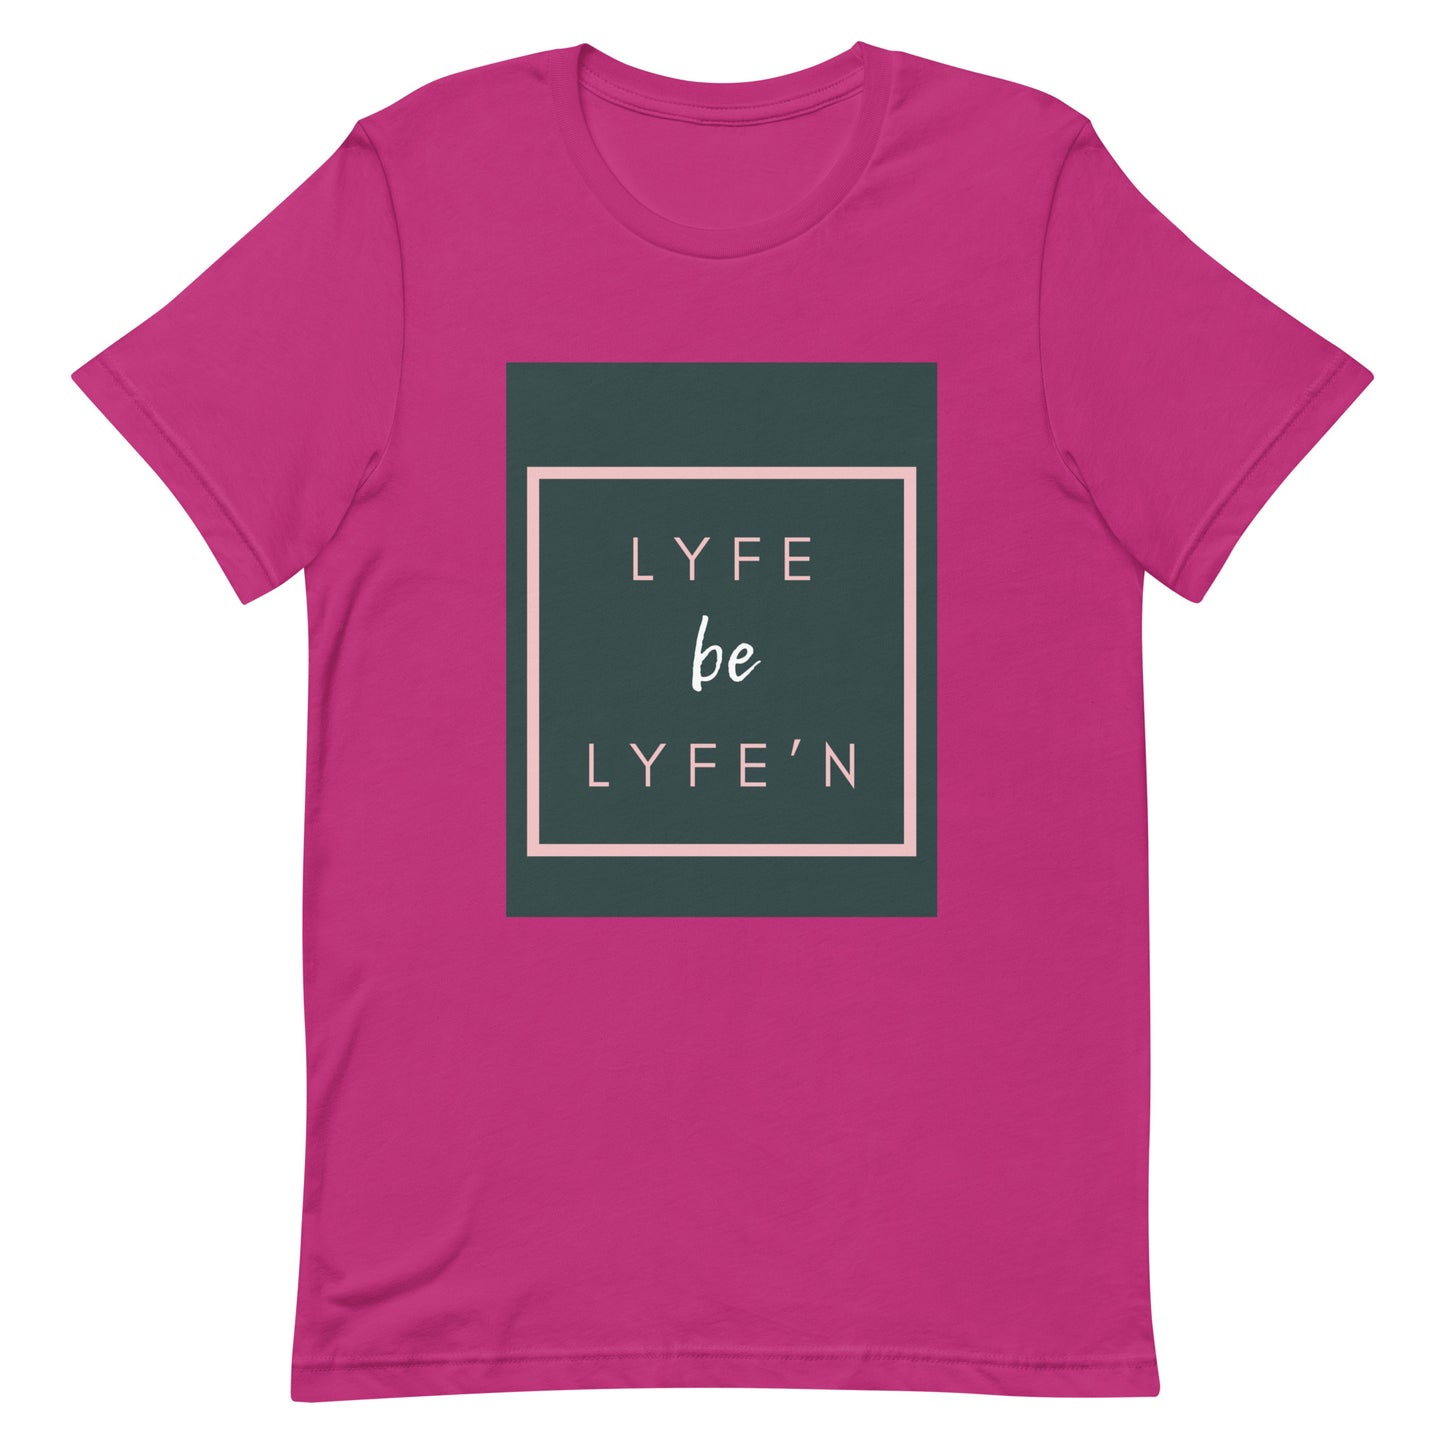 Lyfe be Lyfe'n T-shirt